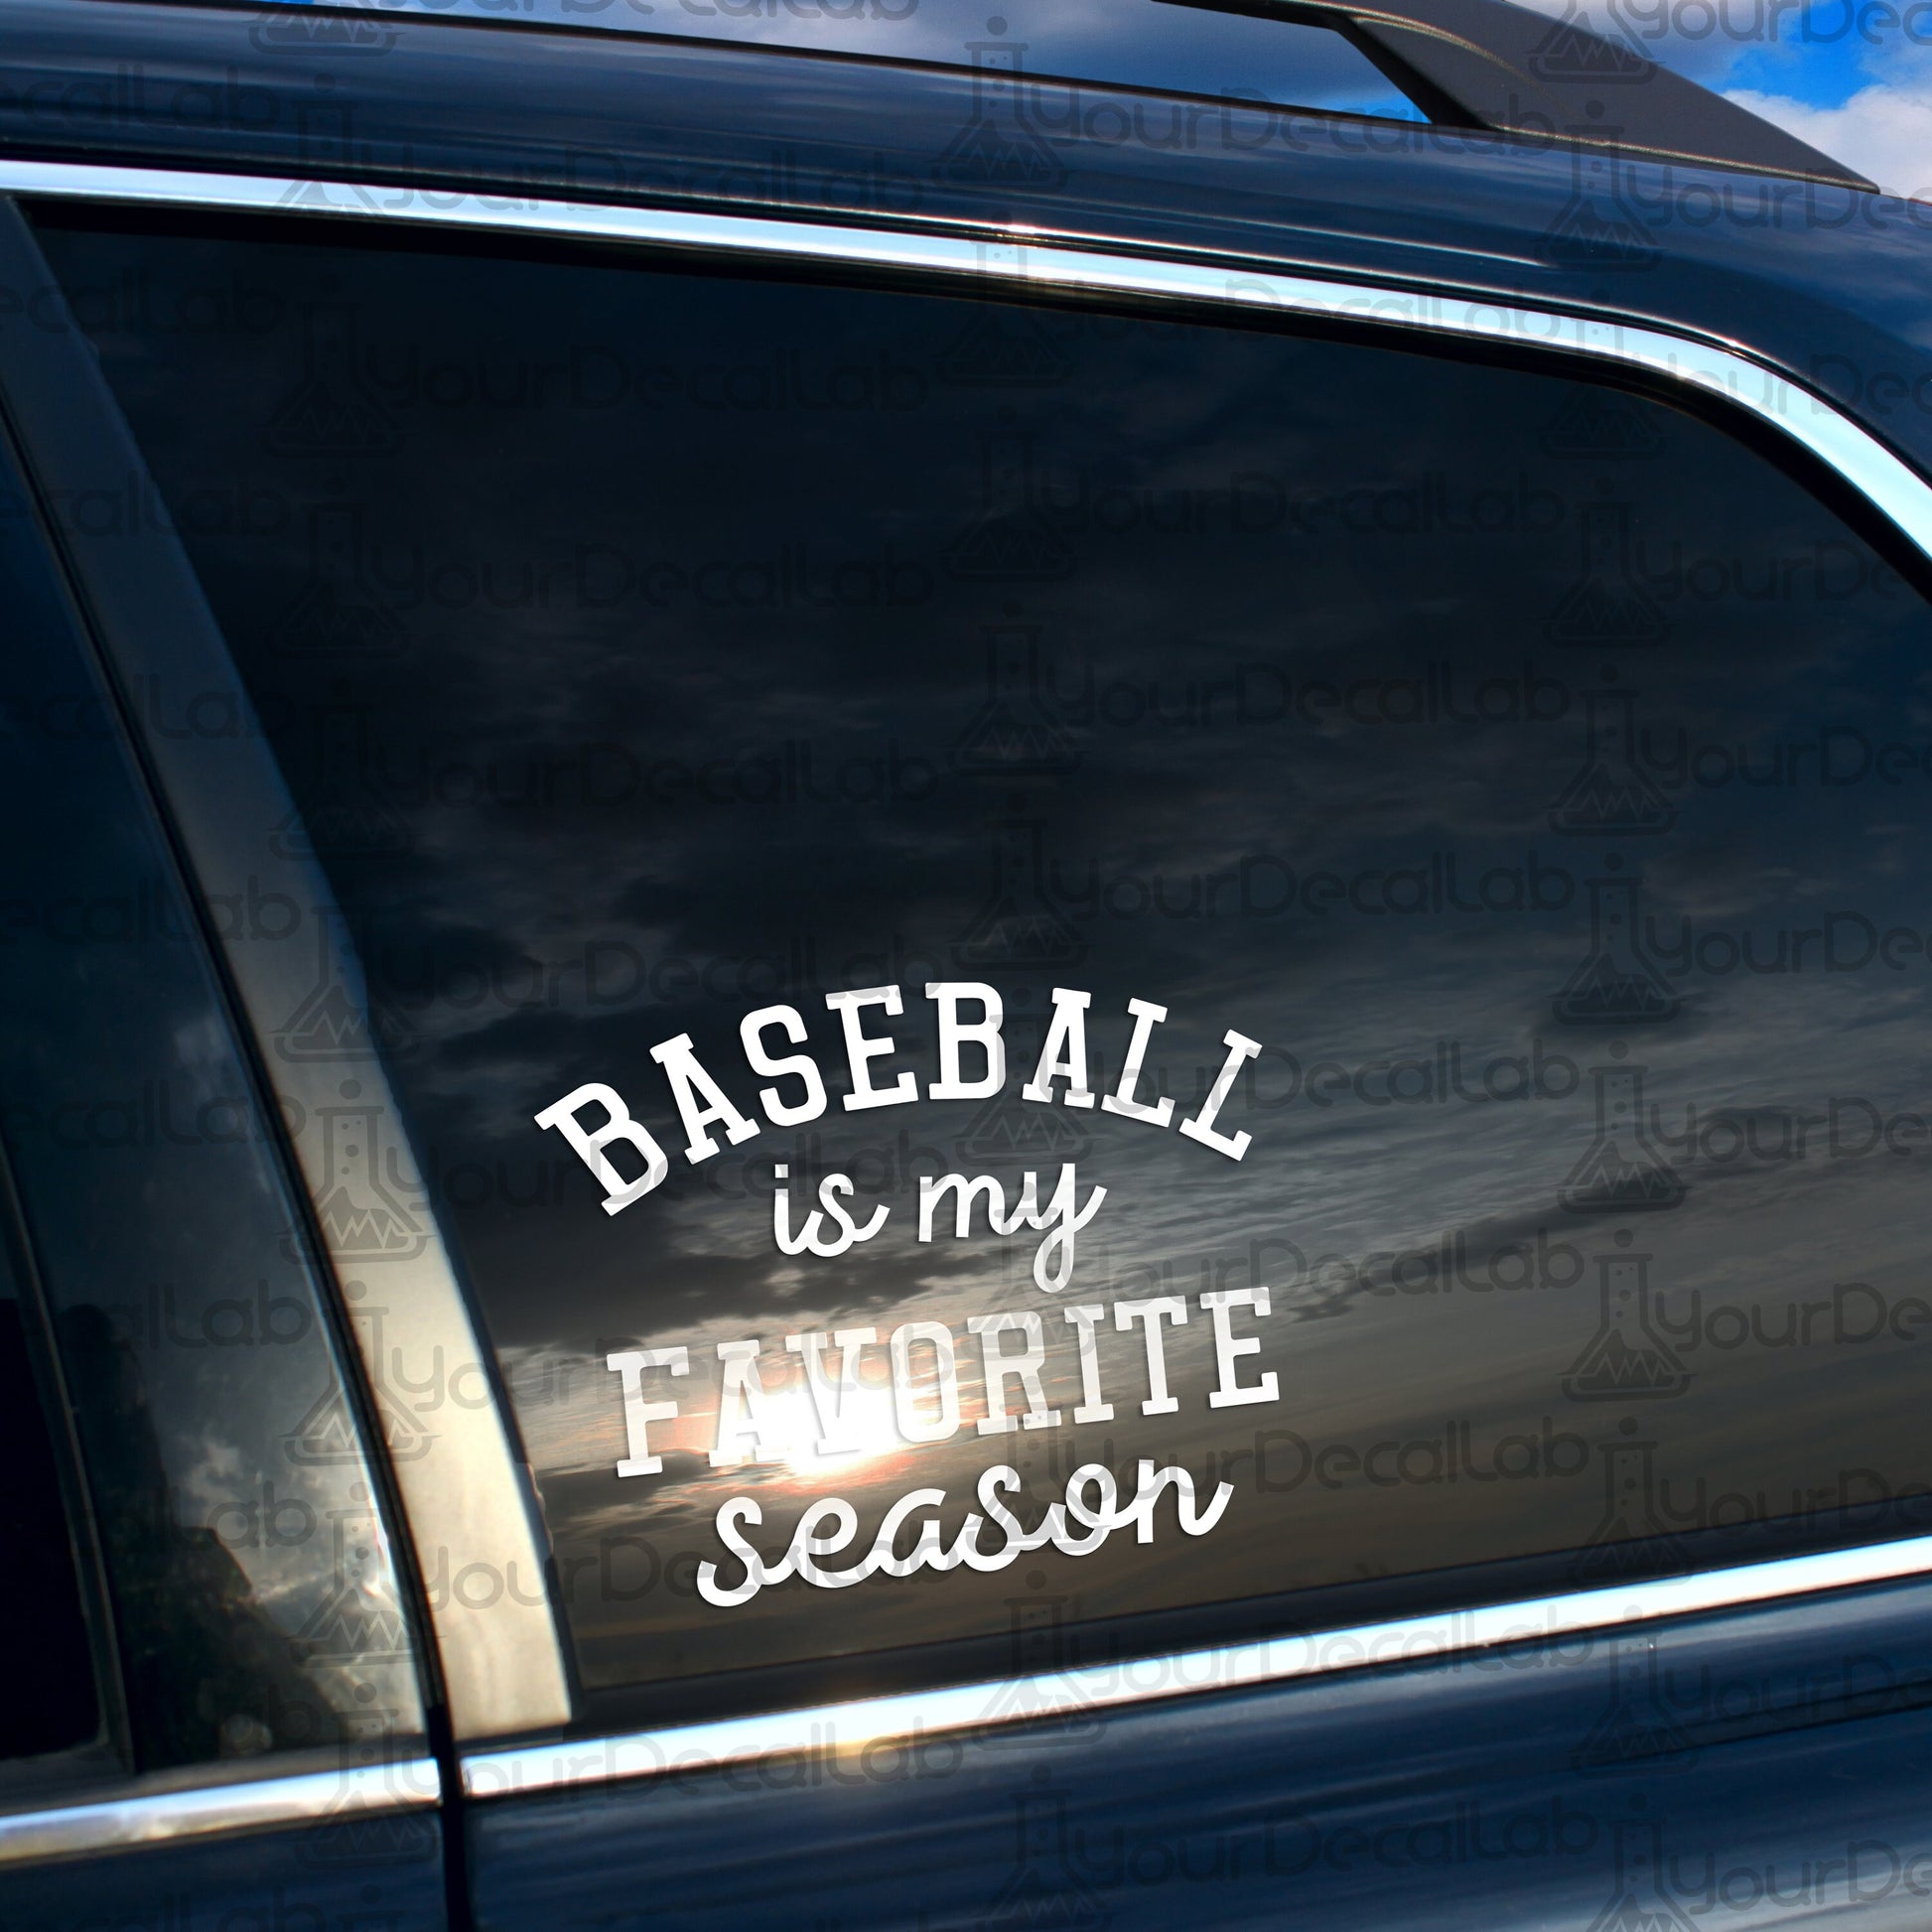 a baseball is my favorite season decal on a car